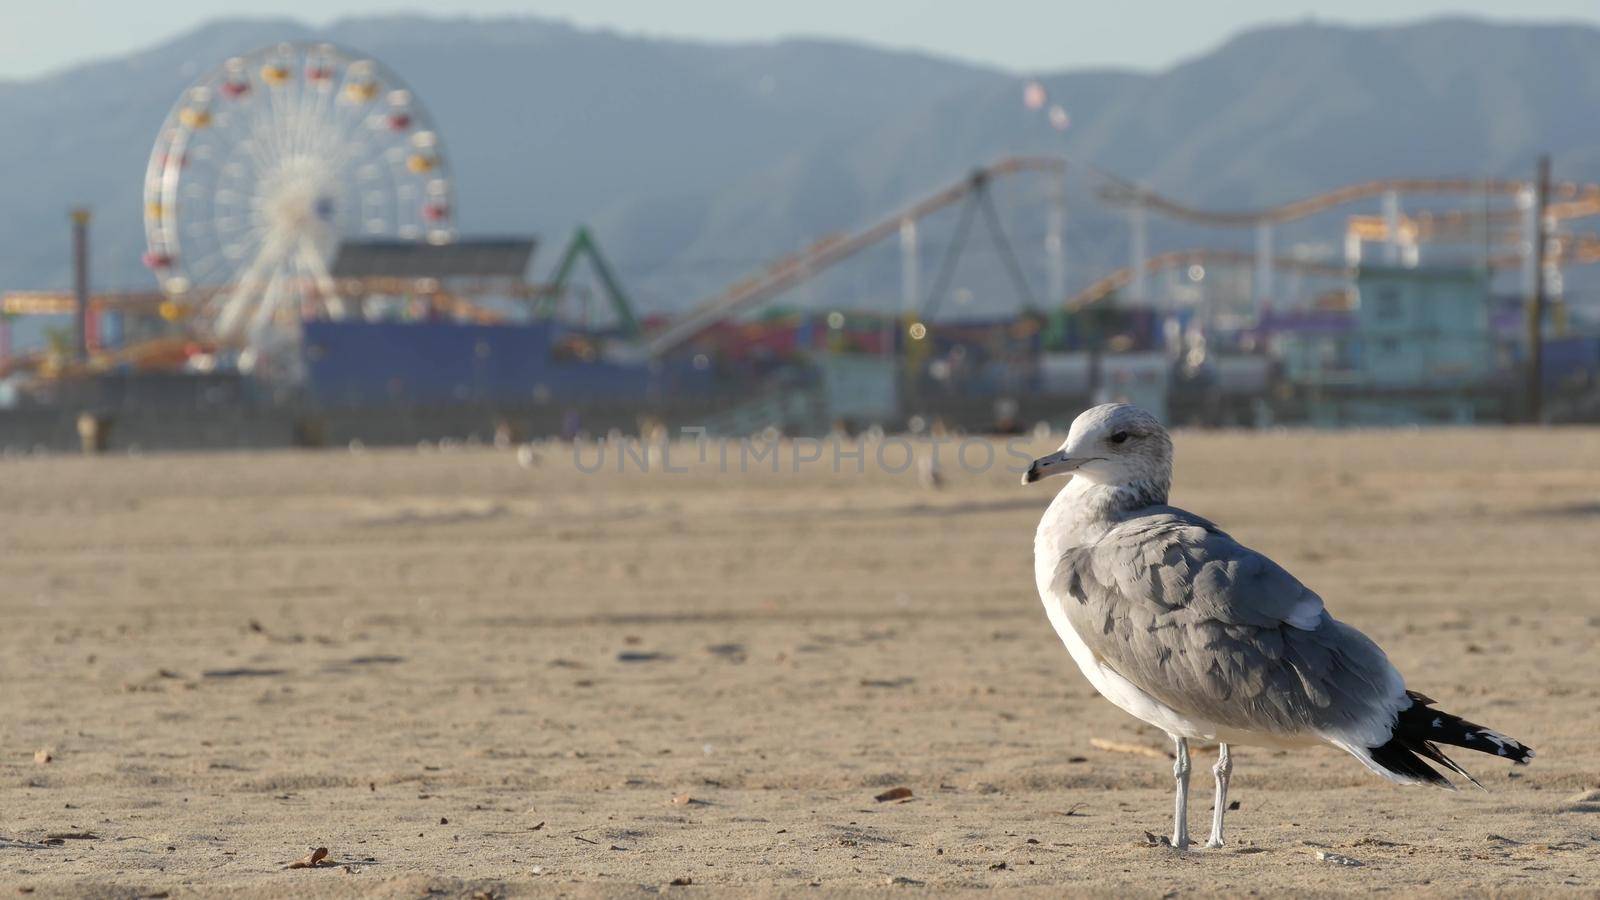 Sea gulls on sunny sandy california beach, classic ferris wheel in amusement park on pier in Santa Monica pacific ocean resort. Summertime iconic view, symbol of Los Angeles, CA USA. Travel concept.